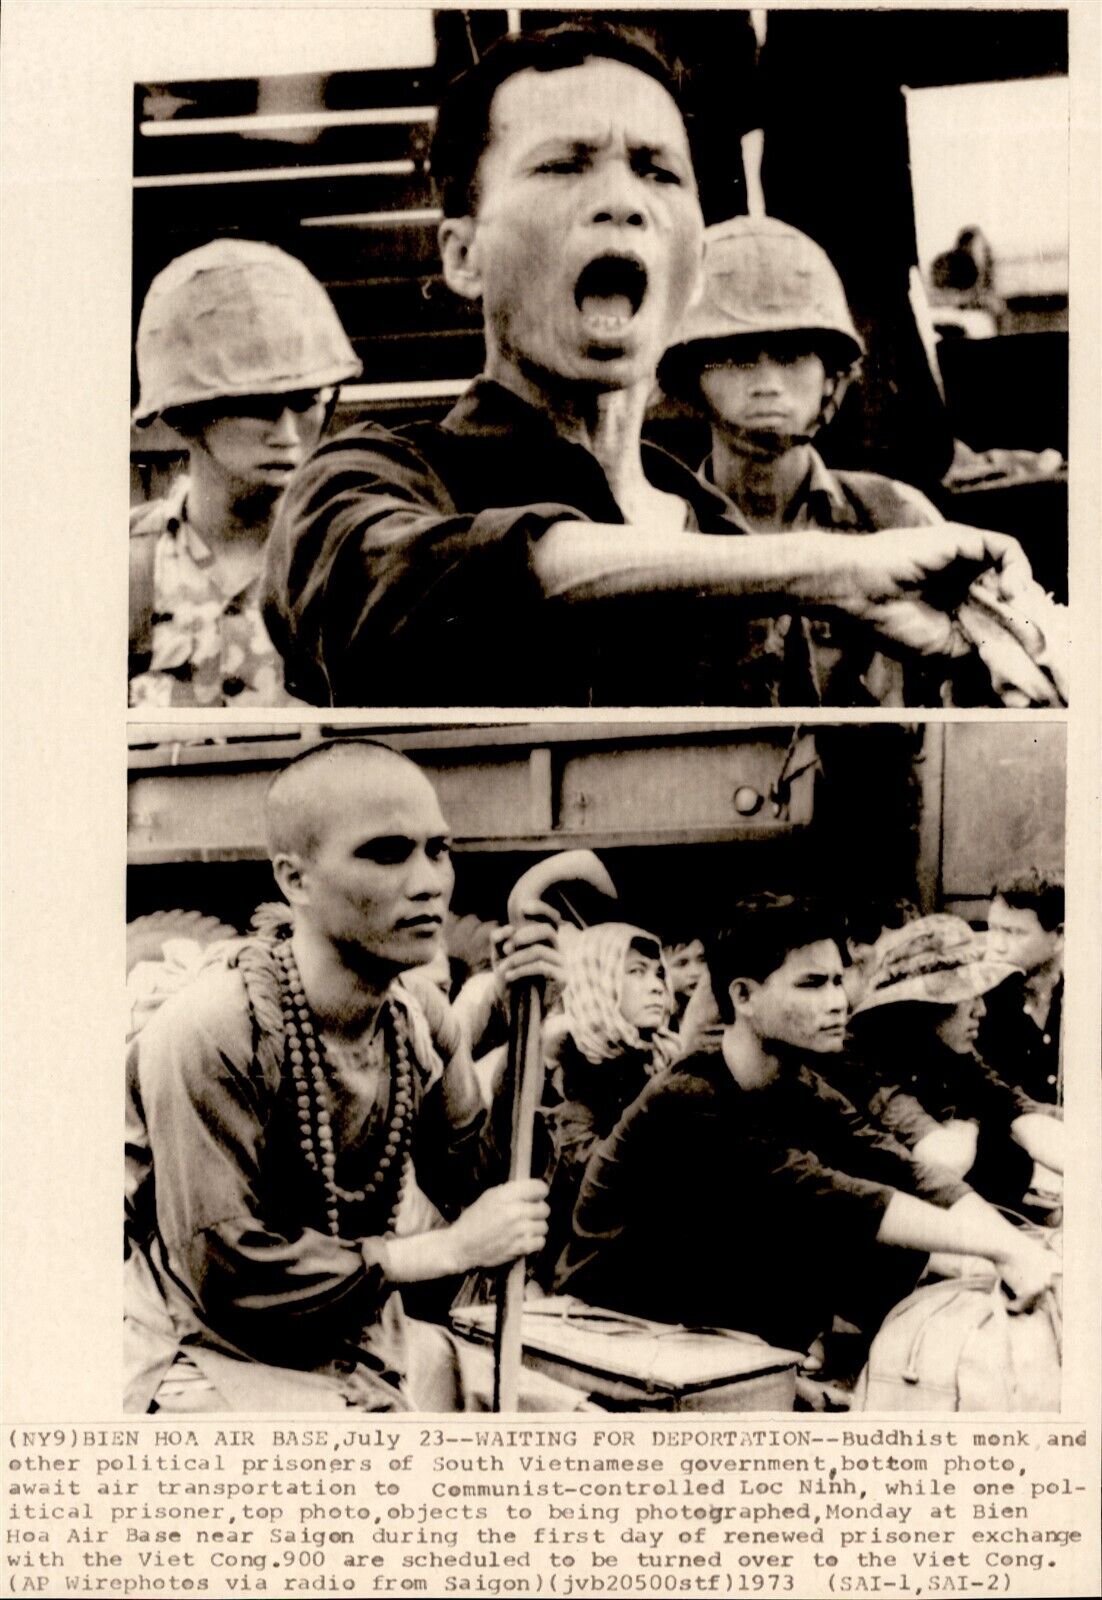 LG26 1973 AP Wire Photo BUDDHIST MONK & POLITICAL PRISONERS DEPORTATION VIETNAM